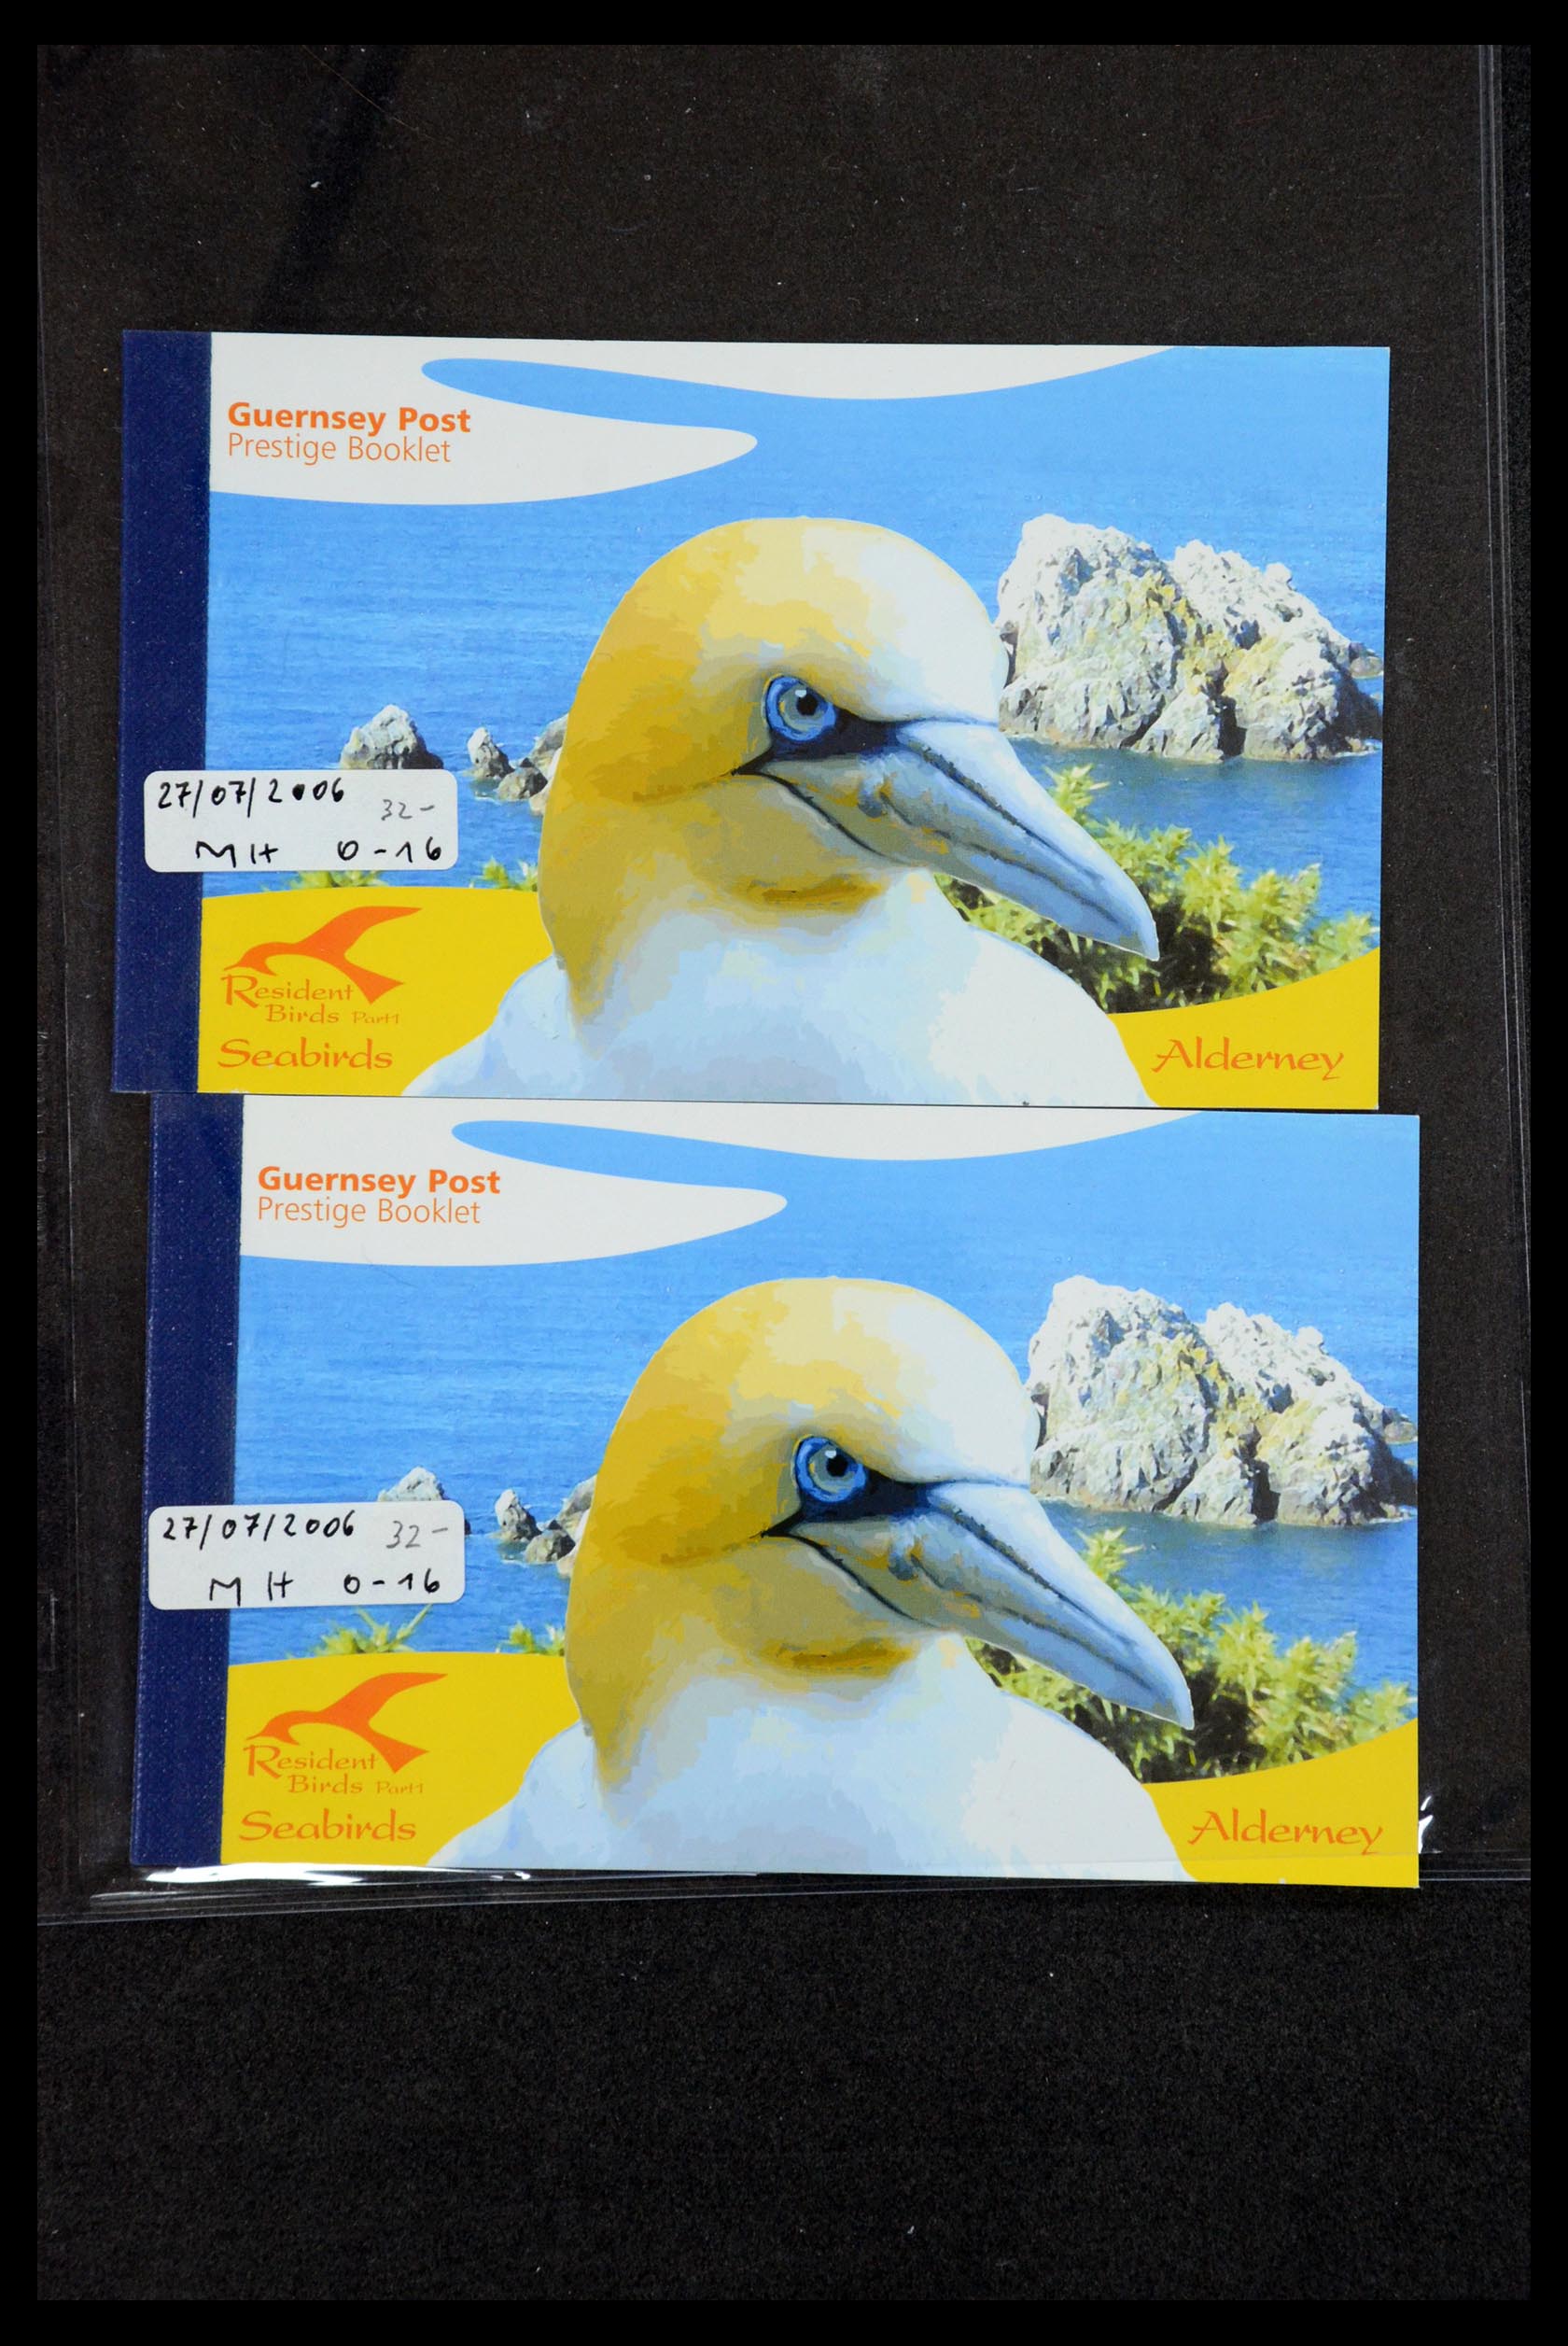 35976 049 - Stamp collection 35976 Guernsey and Alderney stamp booklets 1969-2015!